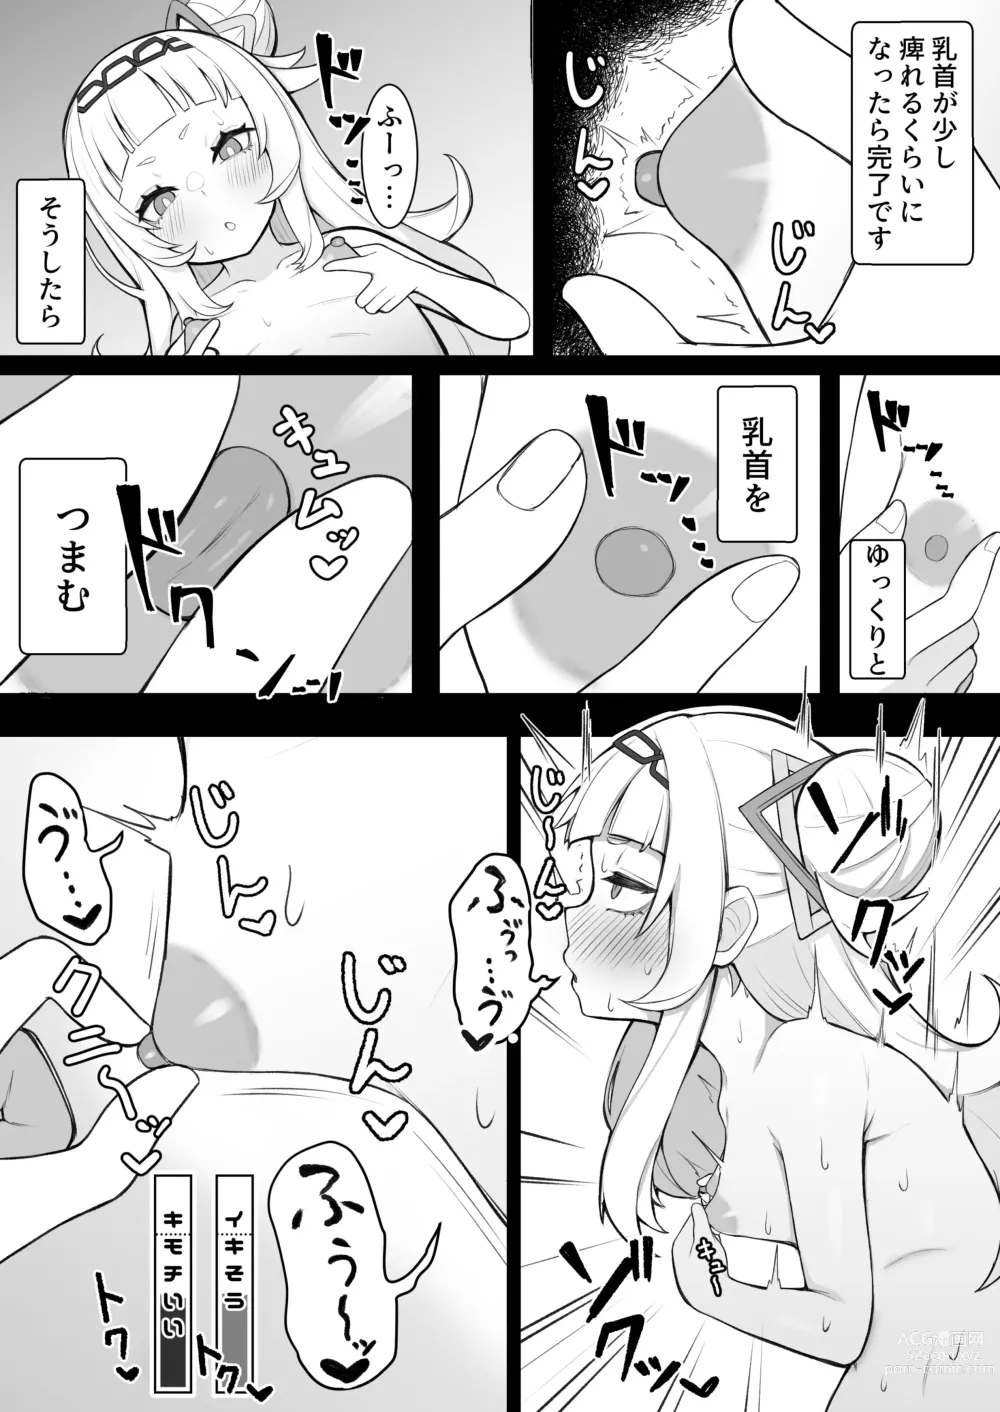 Page 6 of doujinshi Tensai Mahou Shoujo Chikunii Dai Shippai Hon